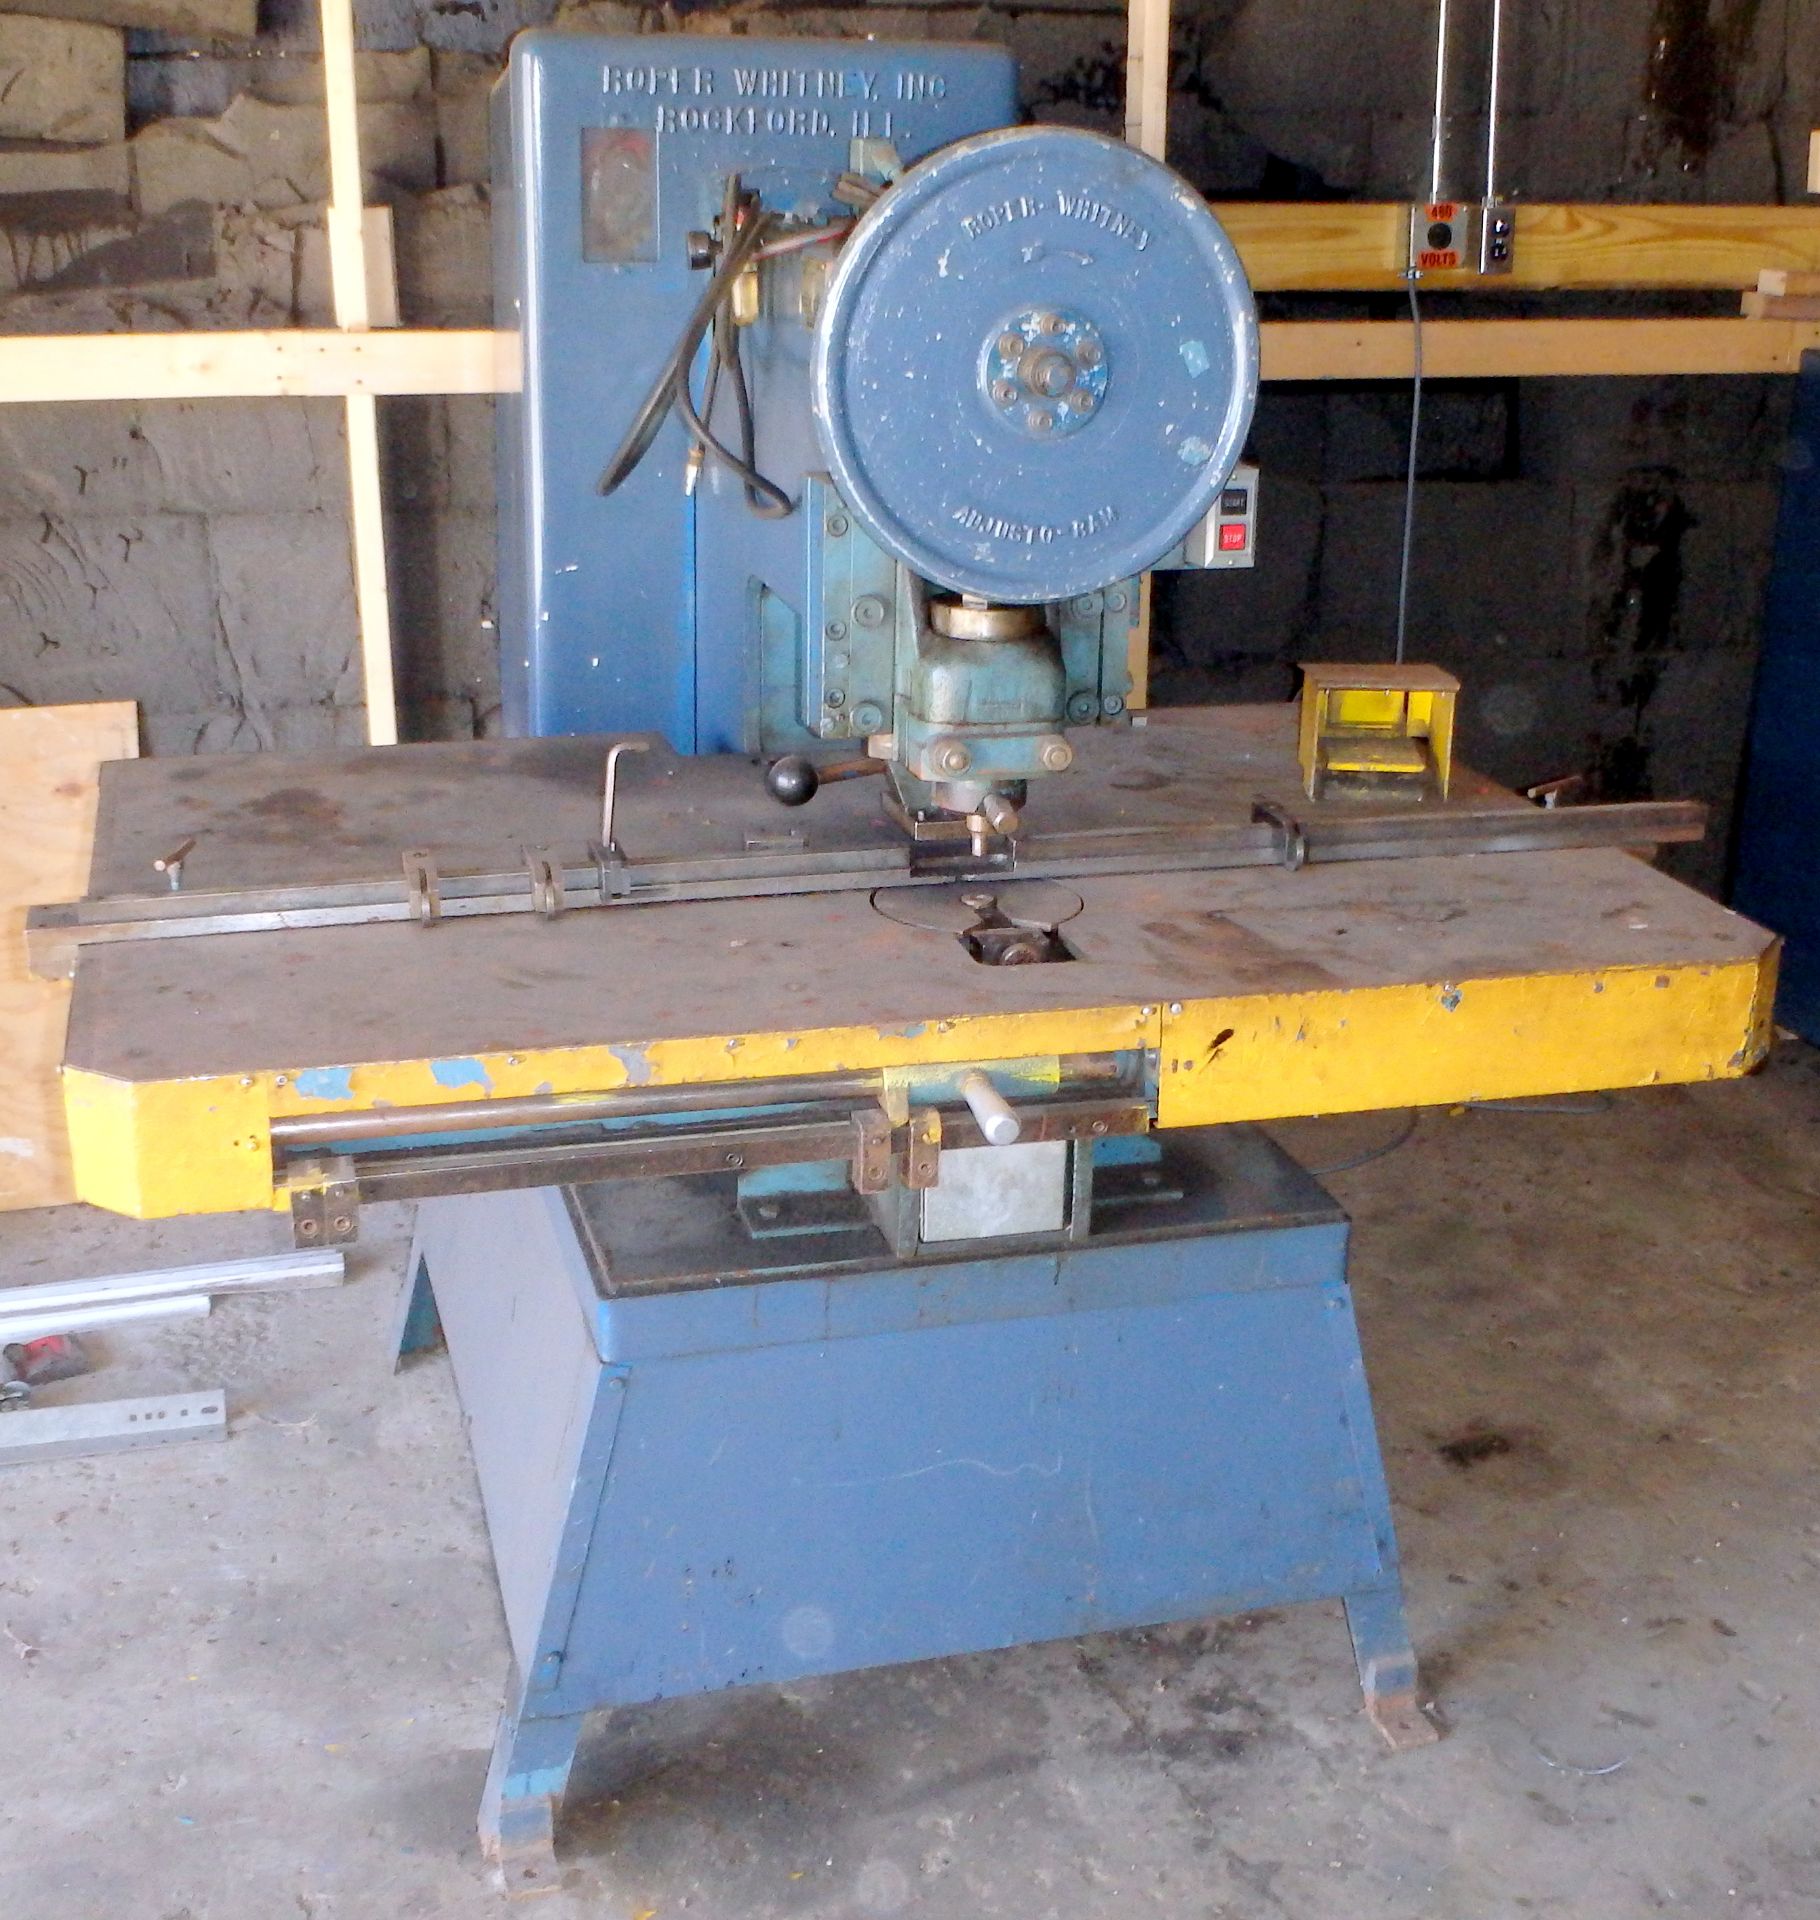 Roper Whitney Mechanical Punch Press